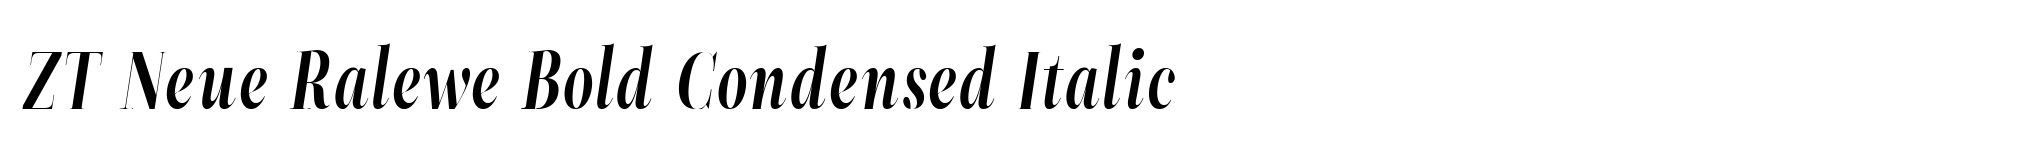 ZT Neue Ralewe Bold Condensed Italic image